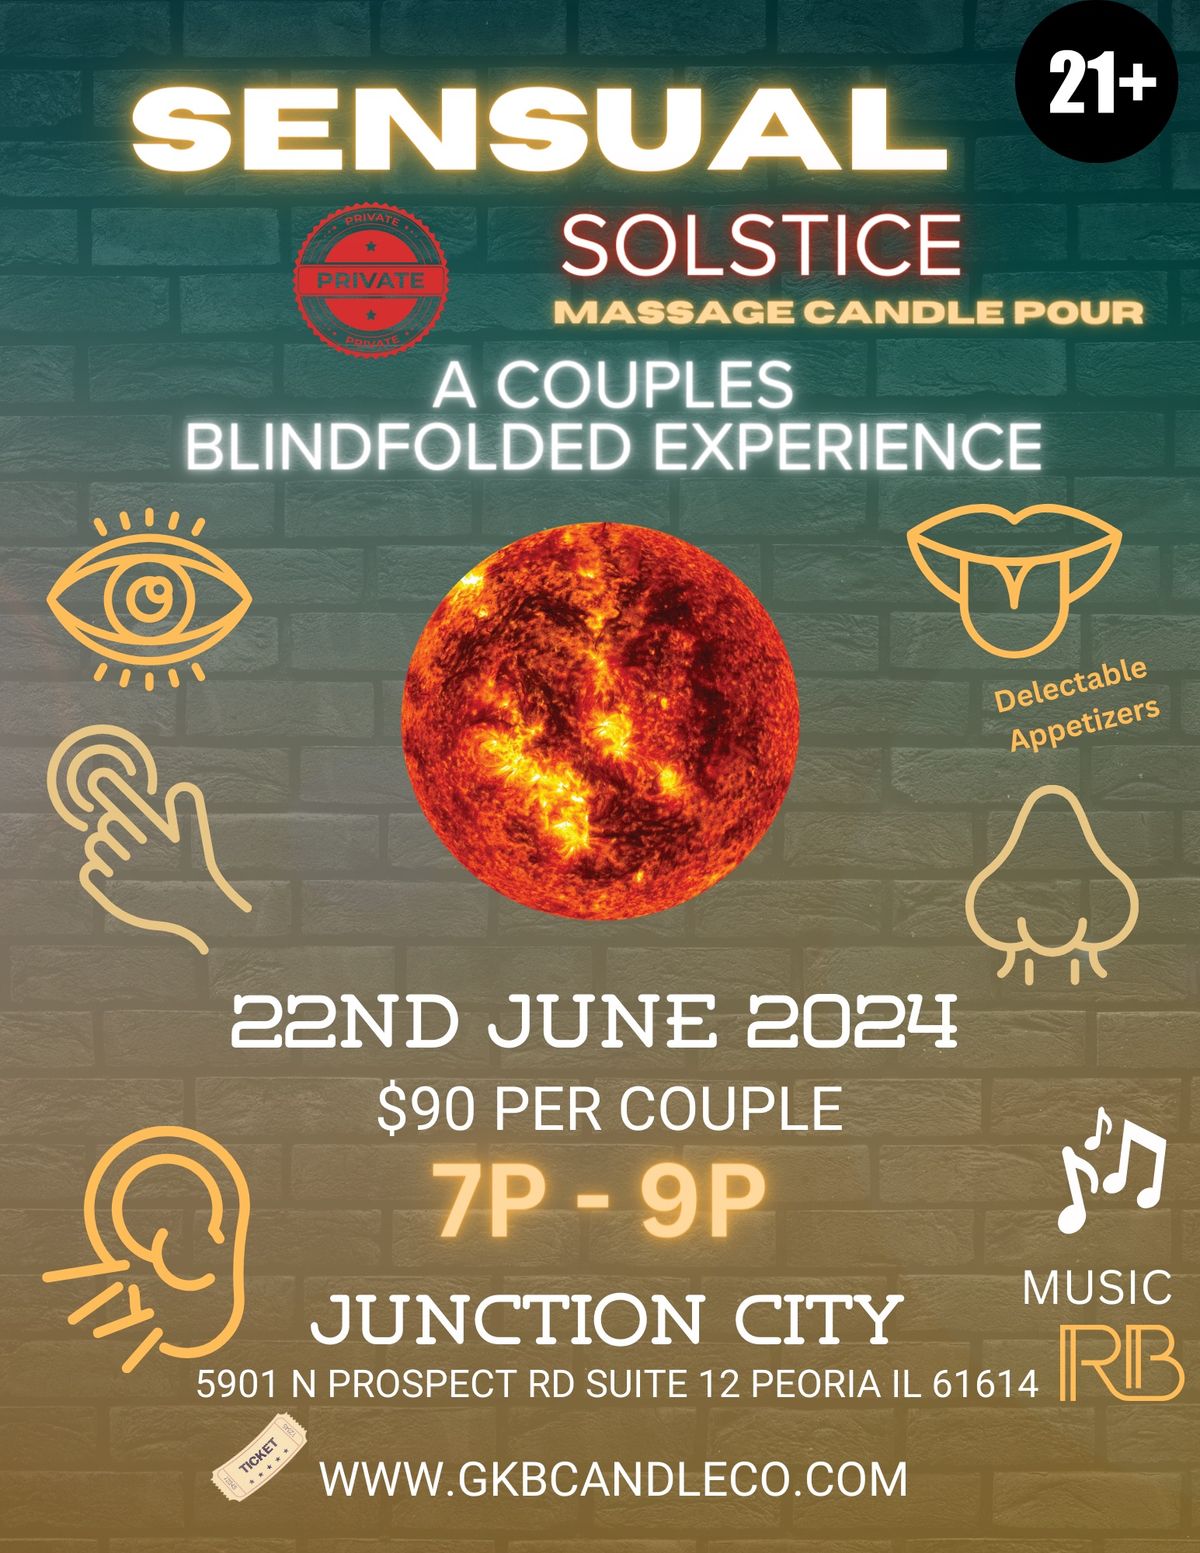 Sensual Solstice - A 5 senses Massage Candle Pour Experience 